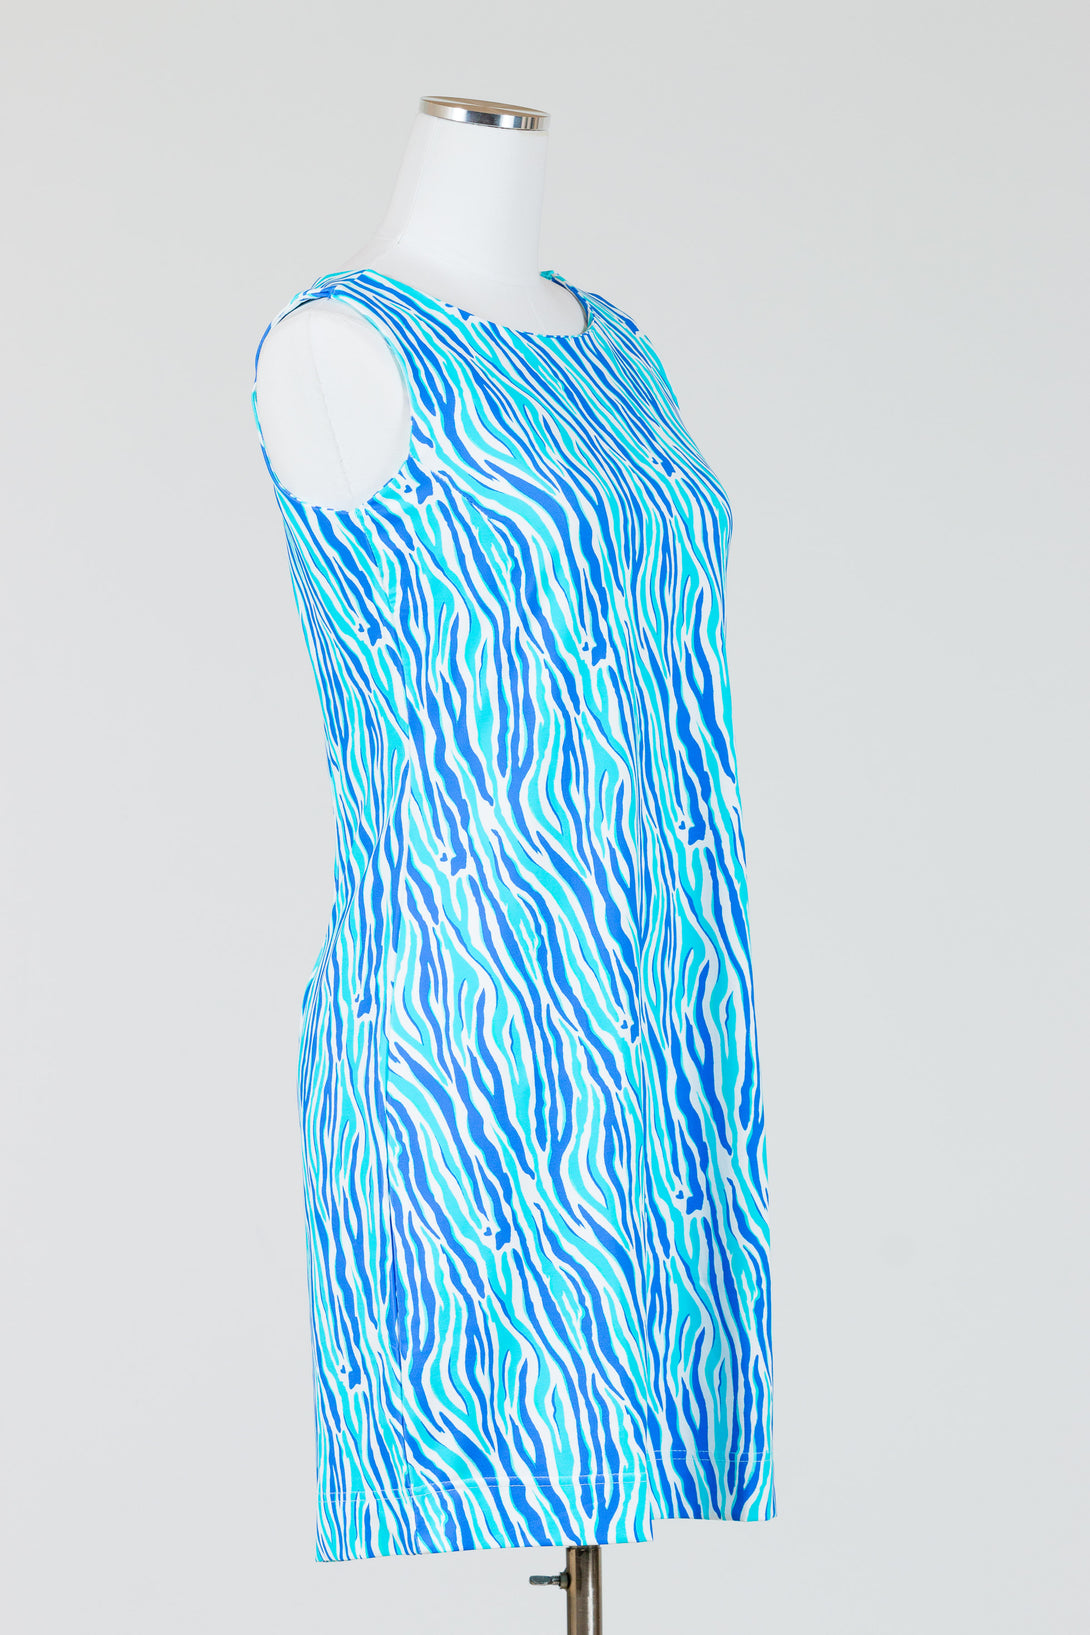 LuluB-Sleeveless-Travel-Dress-Blue-Waves